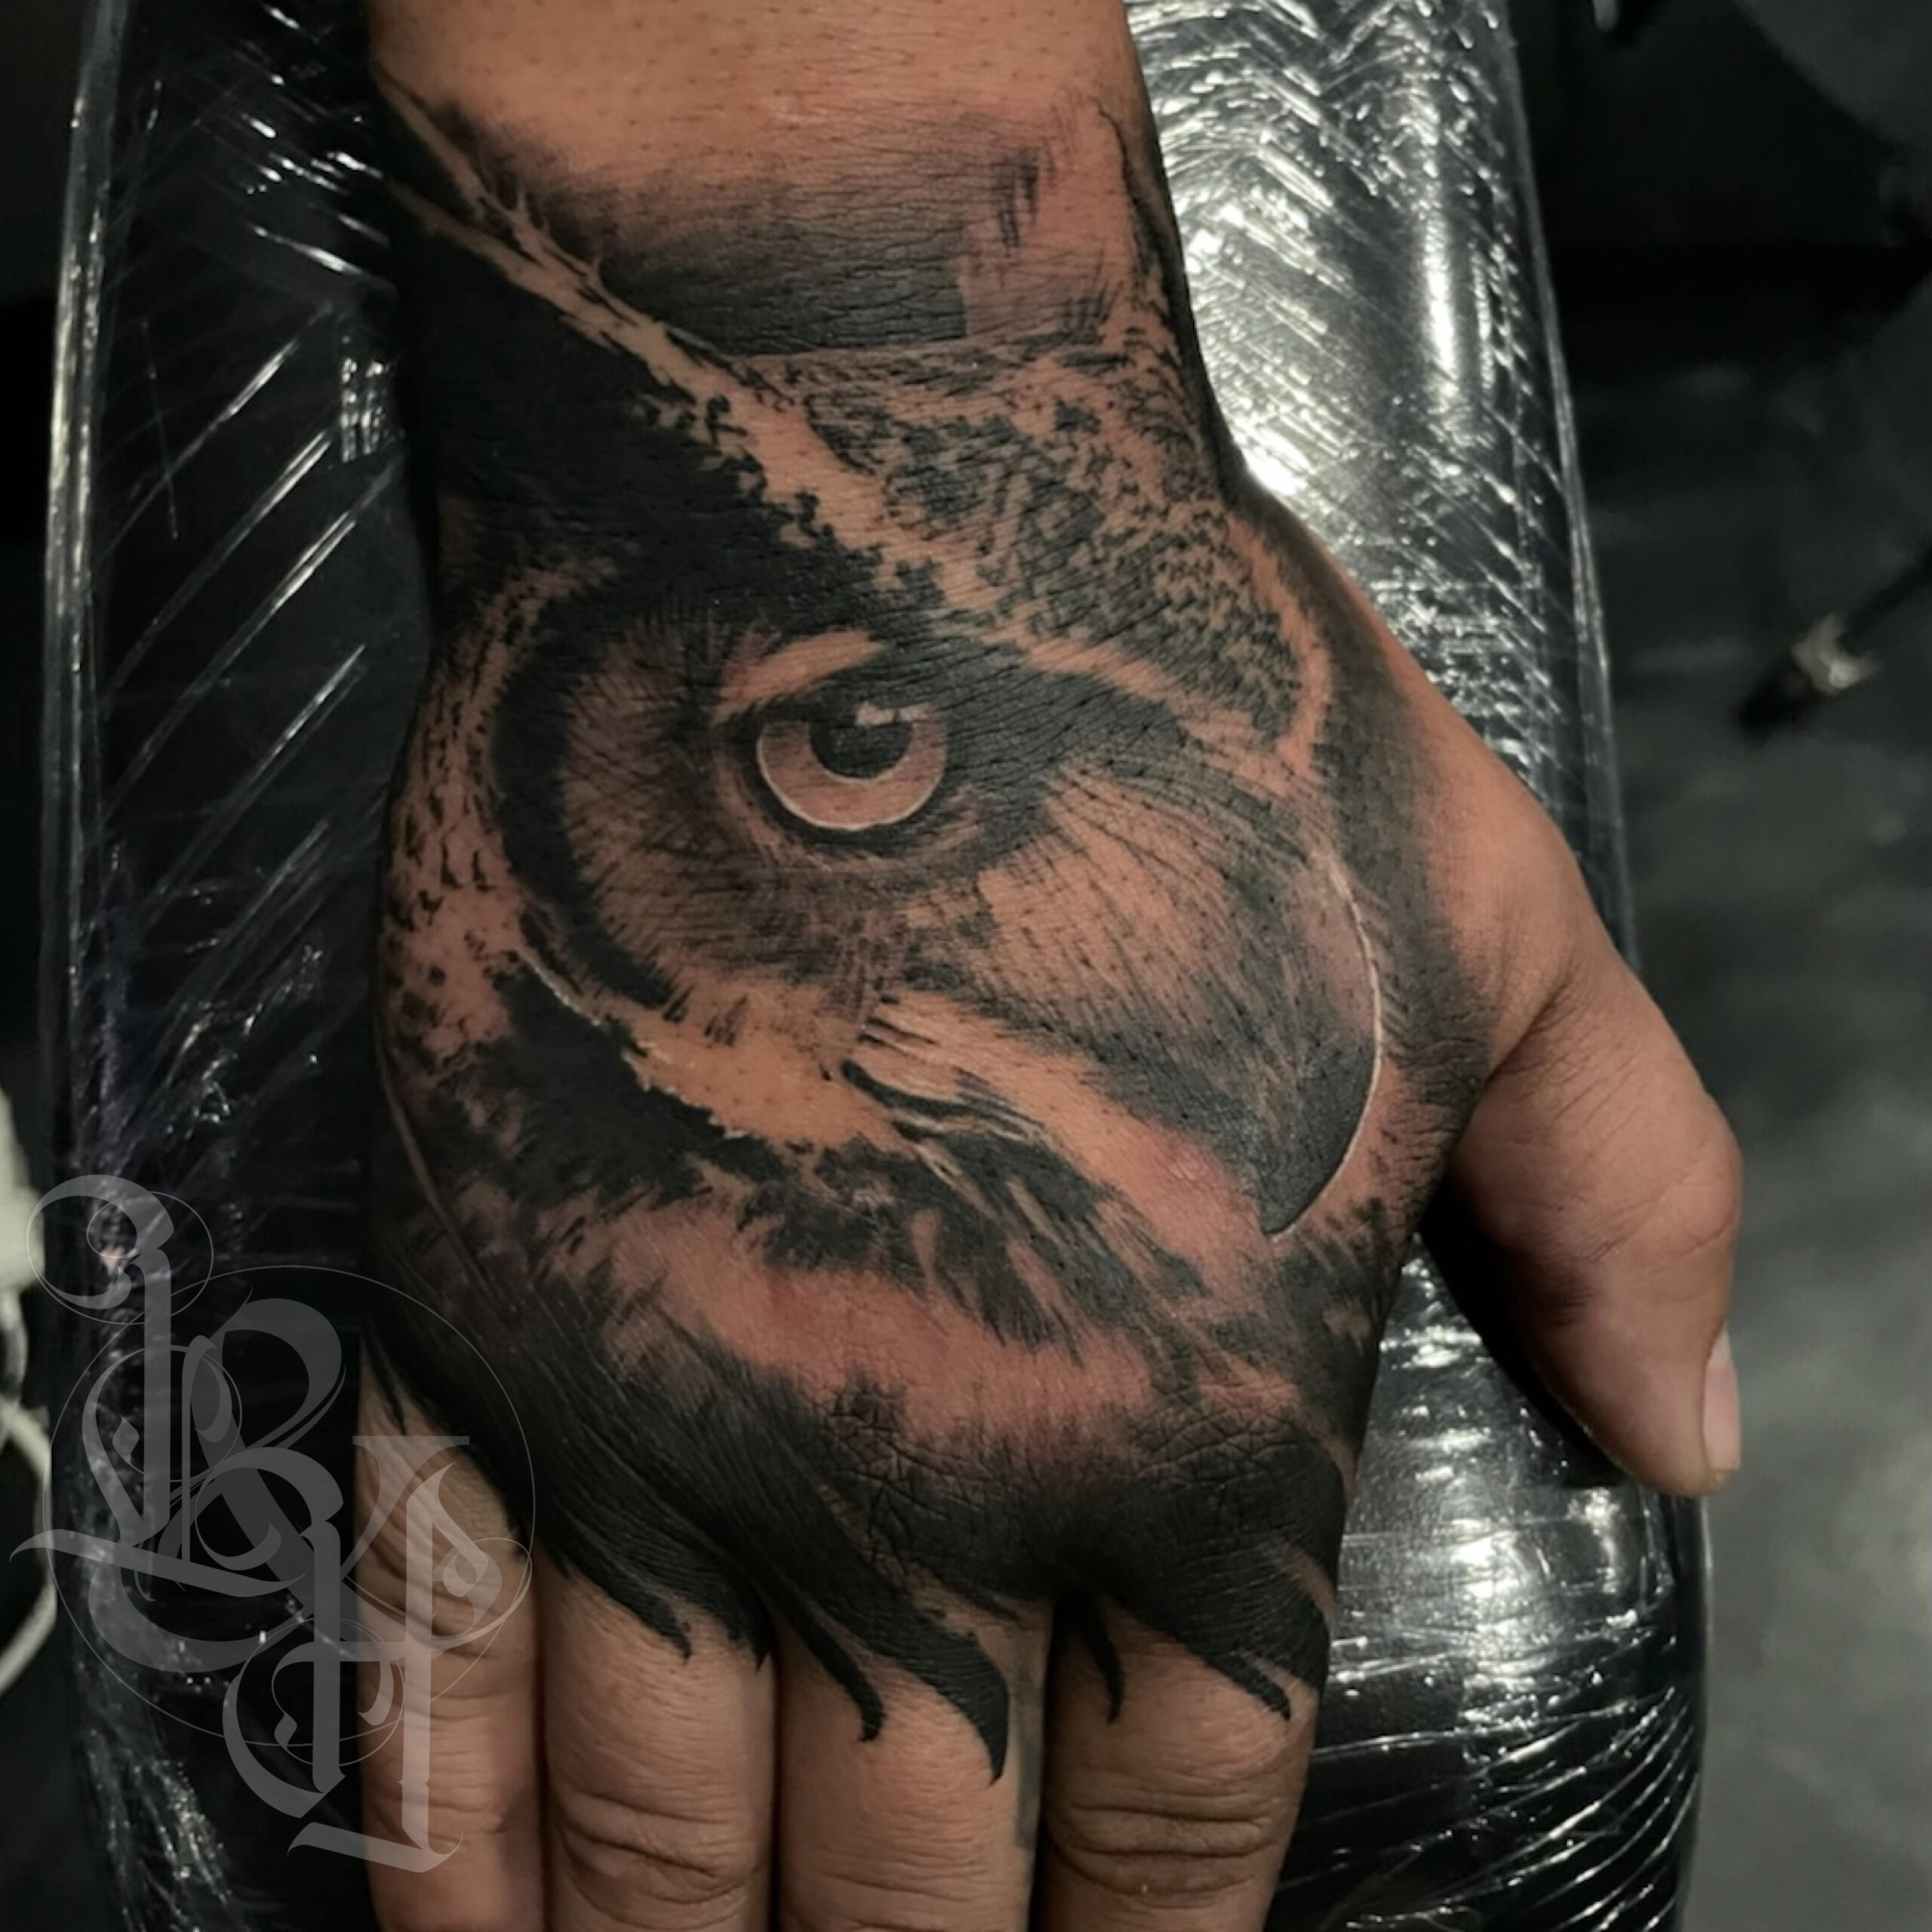 Tattoo uploaded by Bindy  owlhead owl eye rose key skeletonkey  blackngrey hand handtattoo victimsofport victimsofink melbourne  Australia marissao marissao  Tattoodo